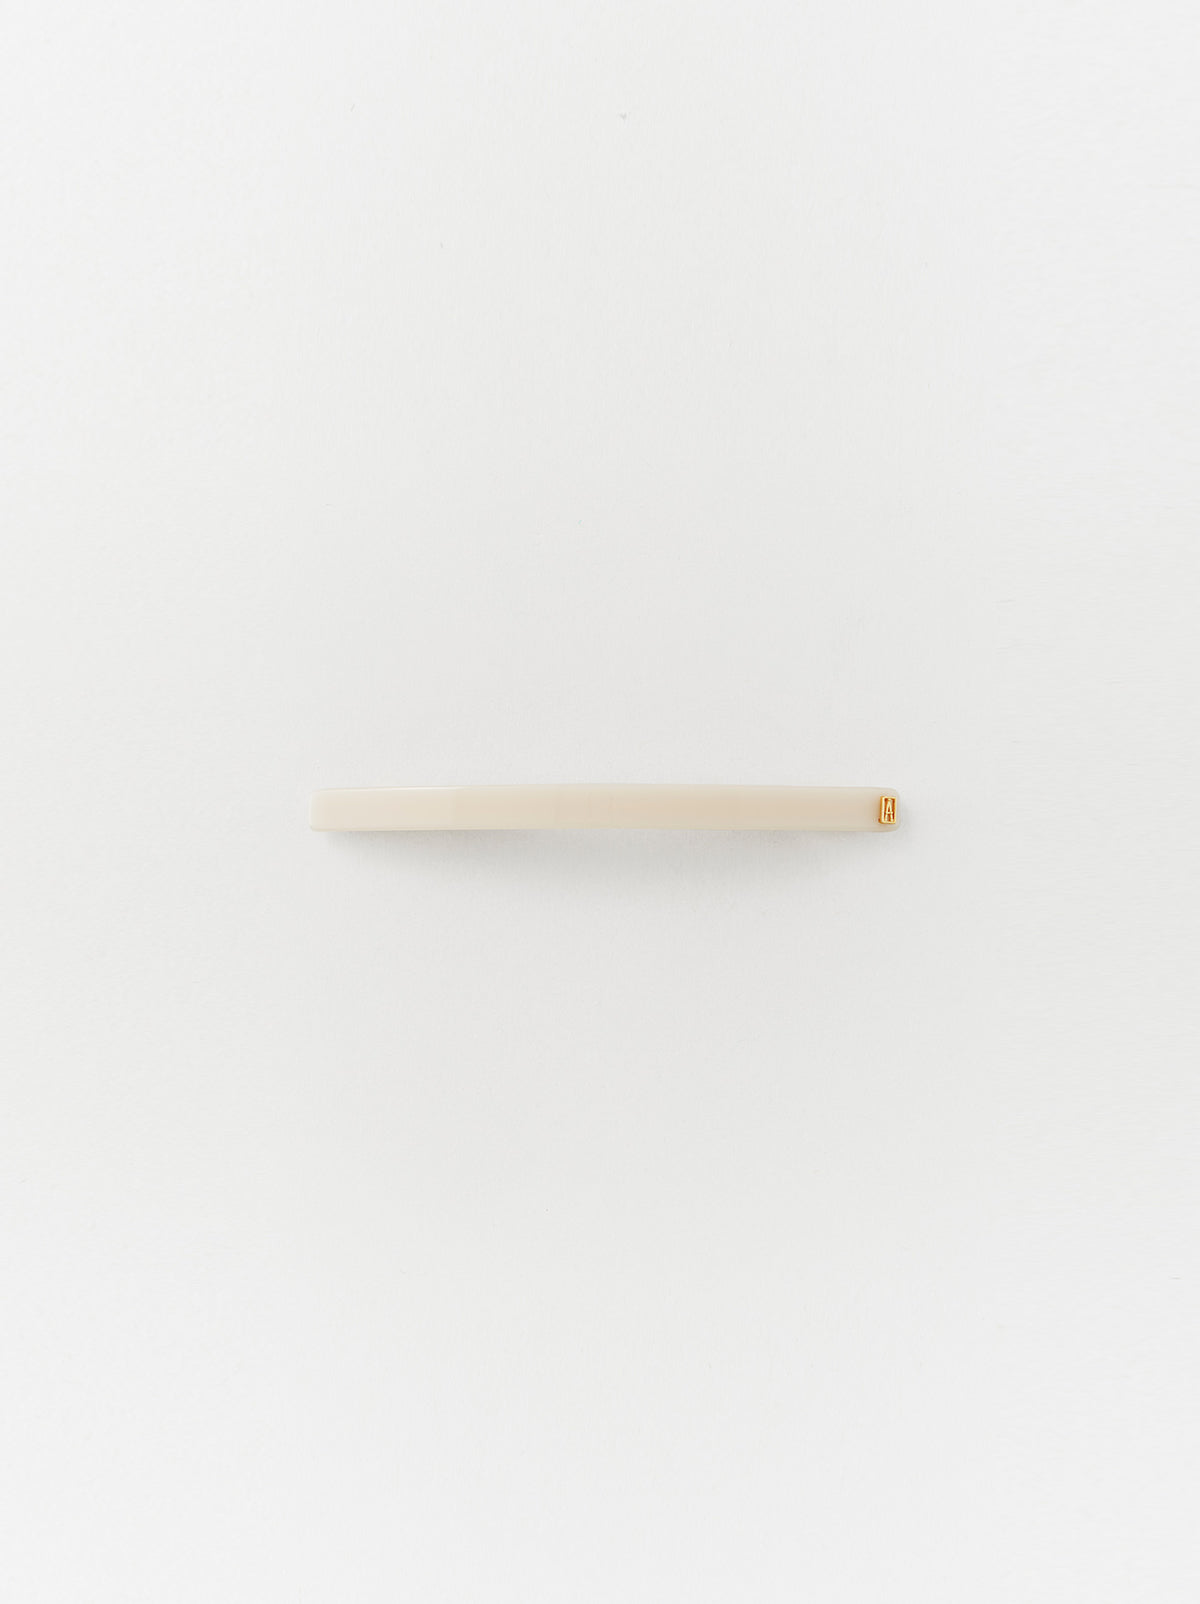 Barrette (10cm) – ARTSu0026SCIENCE ONLINE SELLER